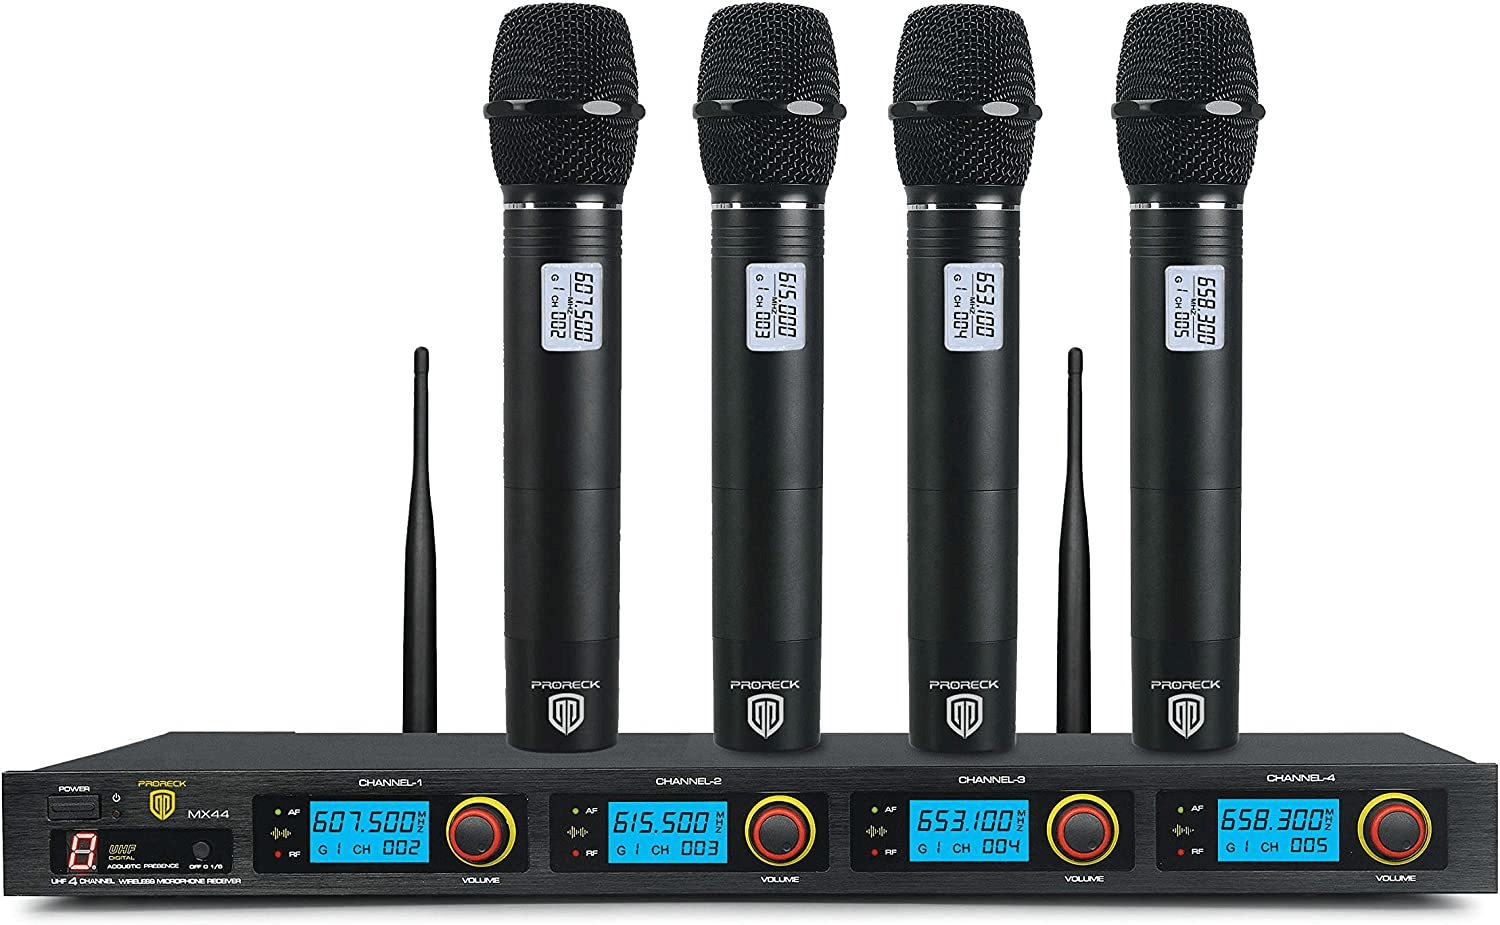 PRORECK MX44 | Wireless Microphone System|Handheld Wireless Vocal Karaoke Machine